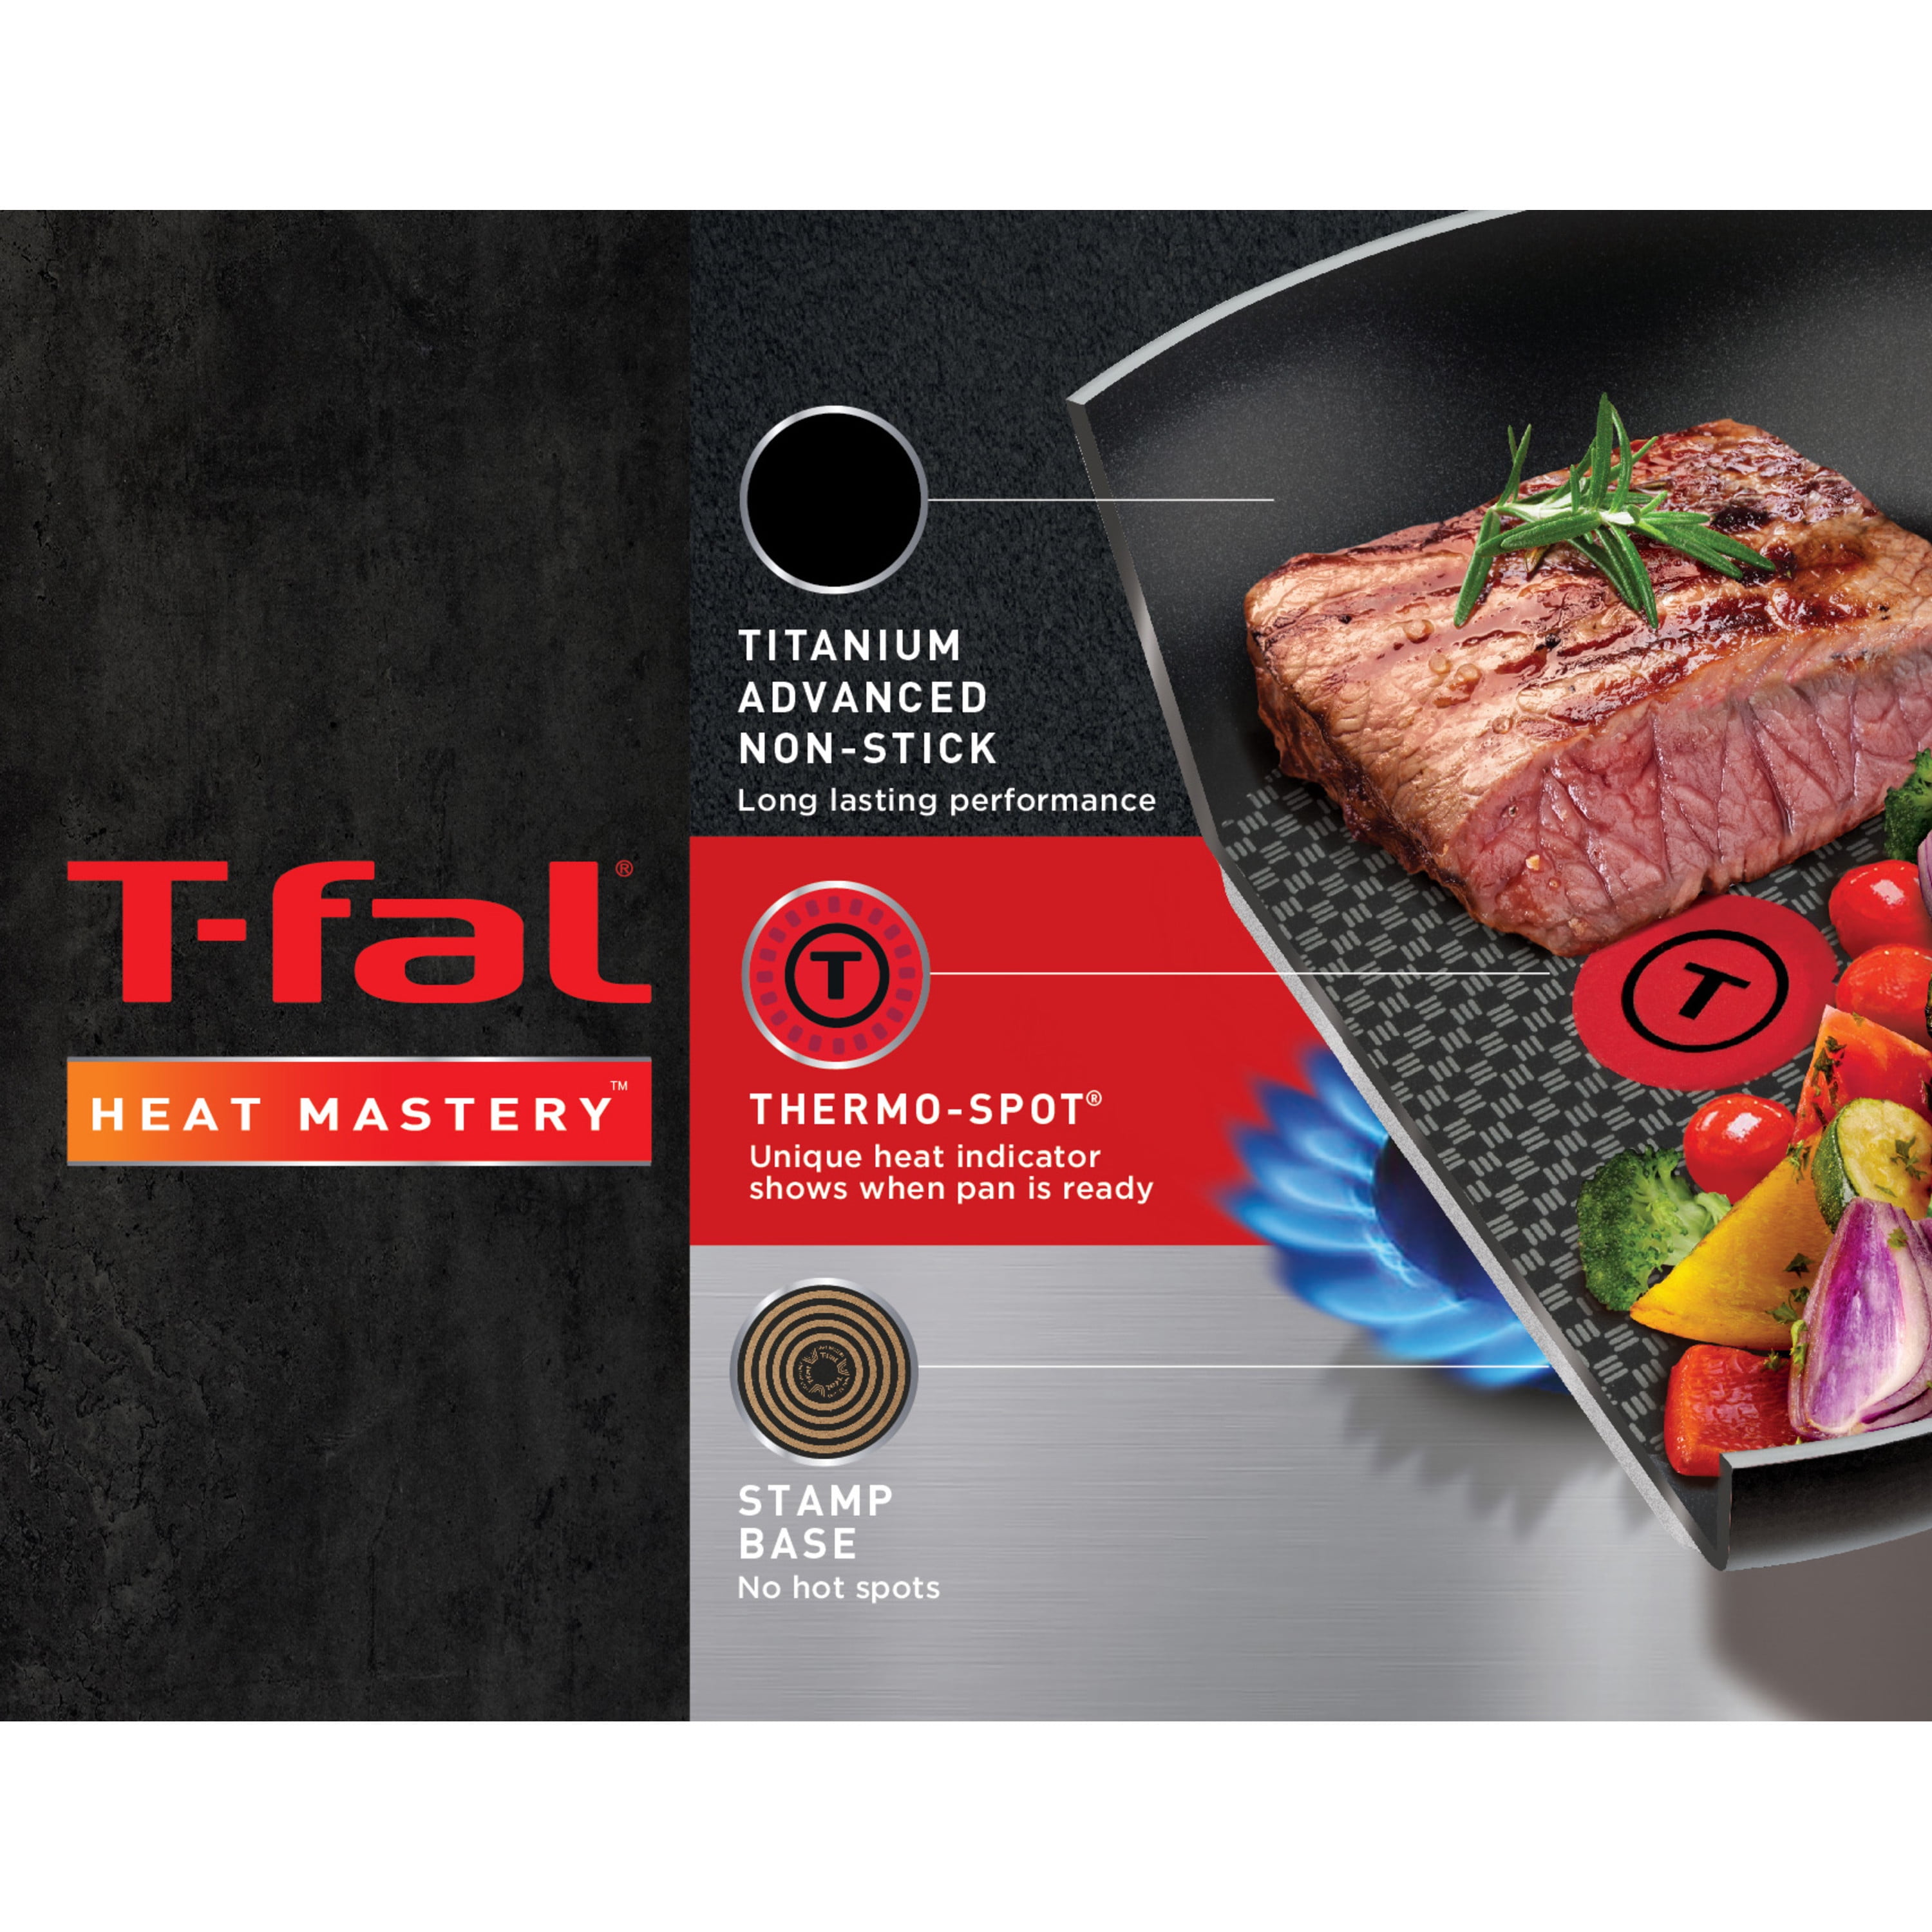 T-Fal Essentials Nonstick Cookware Set - Red - 20 Piece